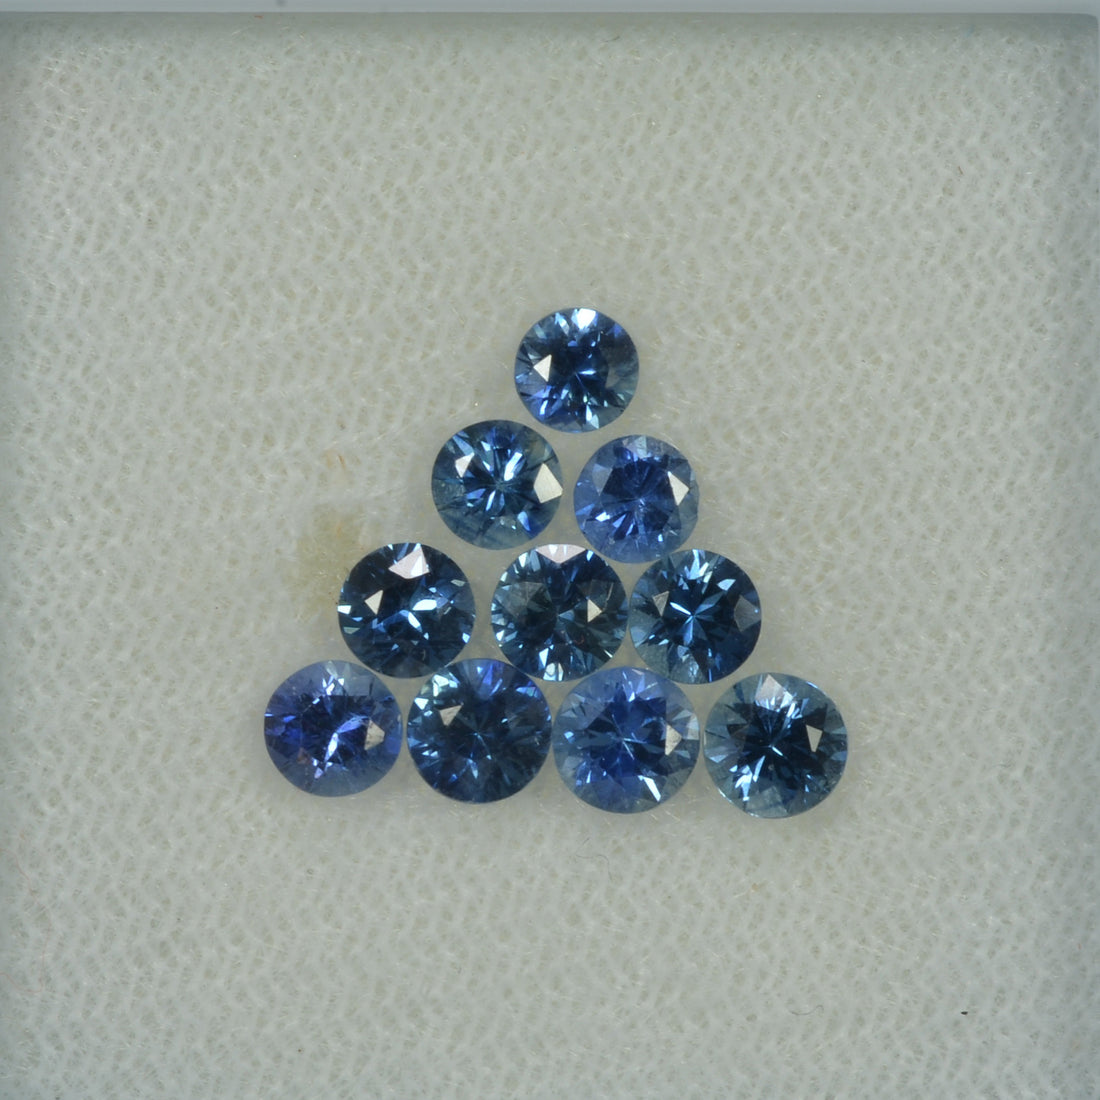 3.3-5.3 mm Natural Blue Sapphire Loose Gemstone Round Diamond Cut Vs Quality Color - Thai Gems Export Ltd.